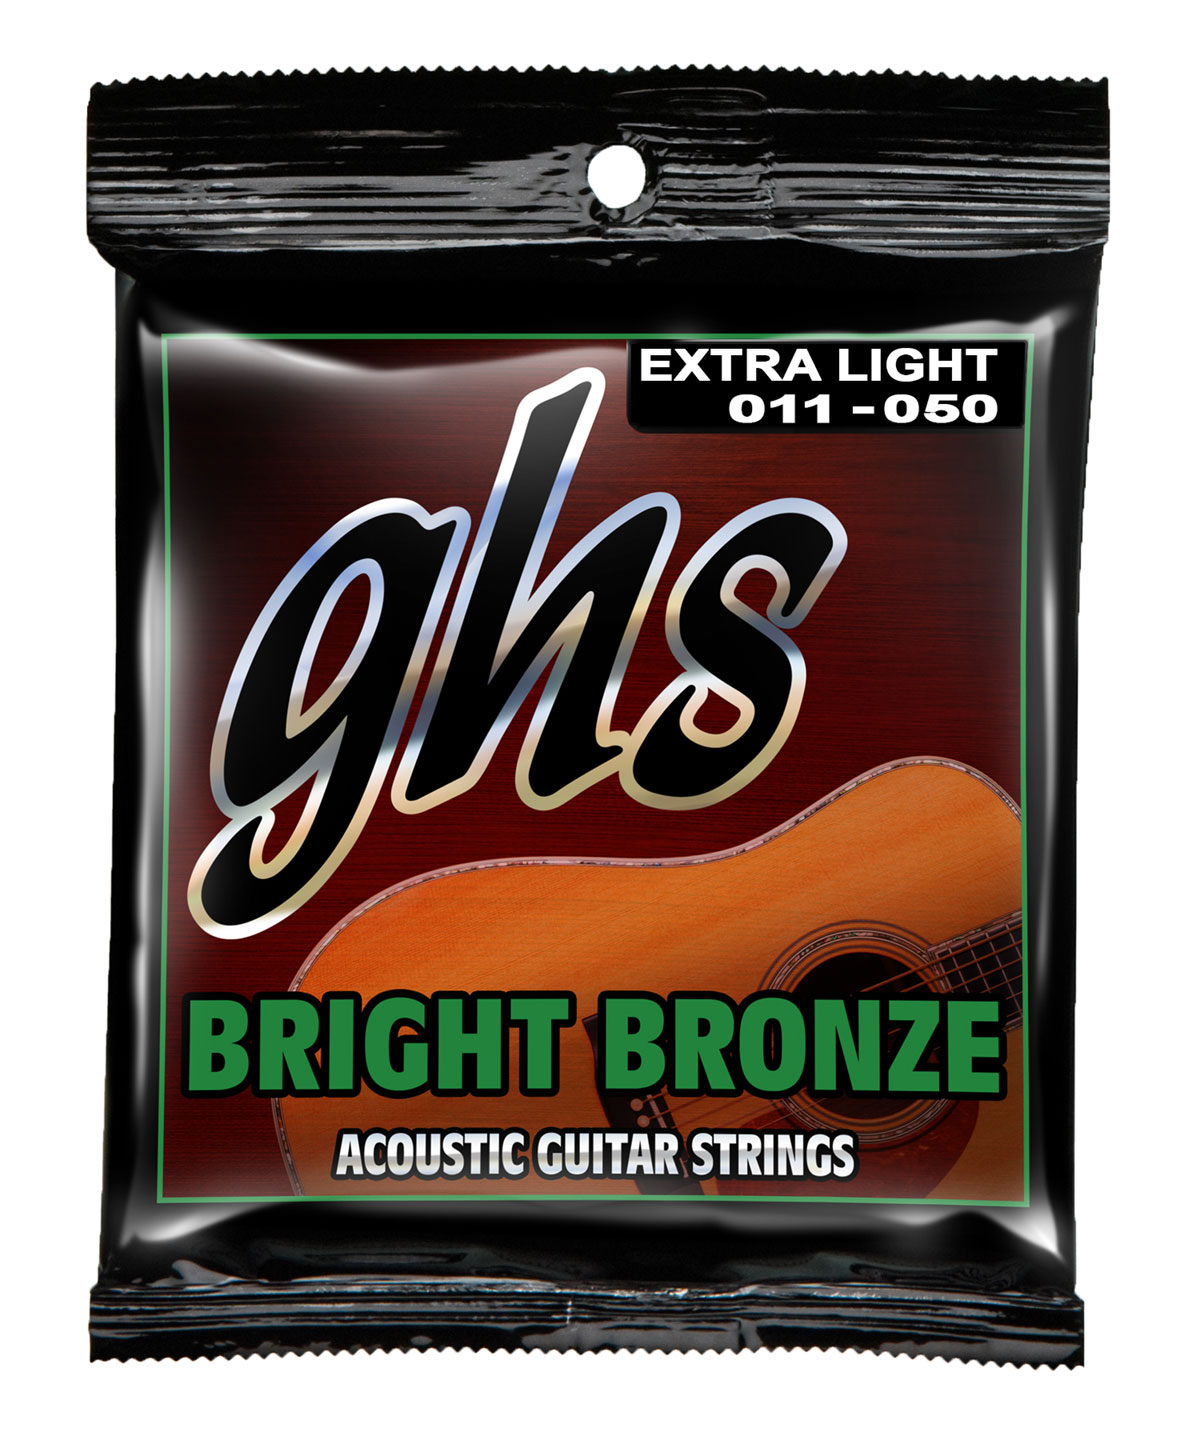 GHS Bright Bronze - BB20X - Acoustic Guitar String Set, 80/20 Bronze, Extra Light, .011-.050